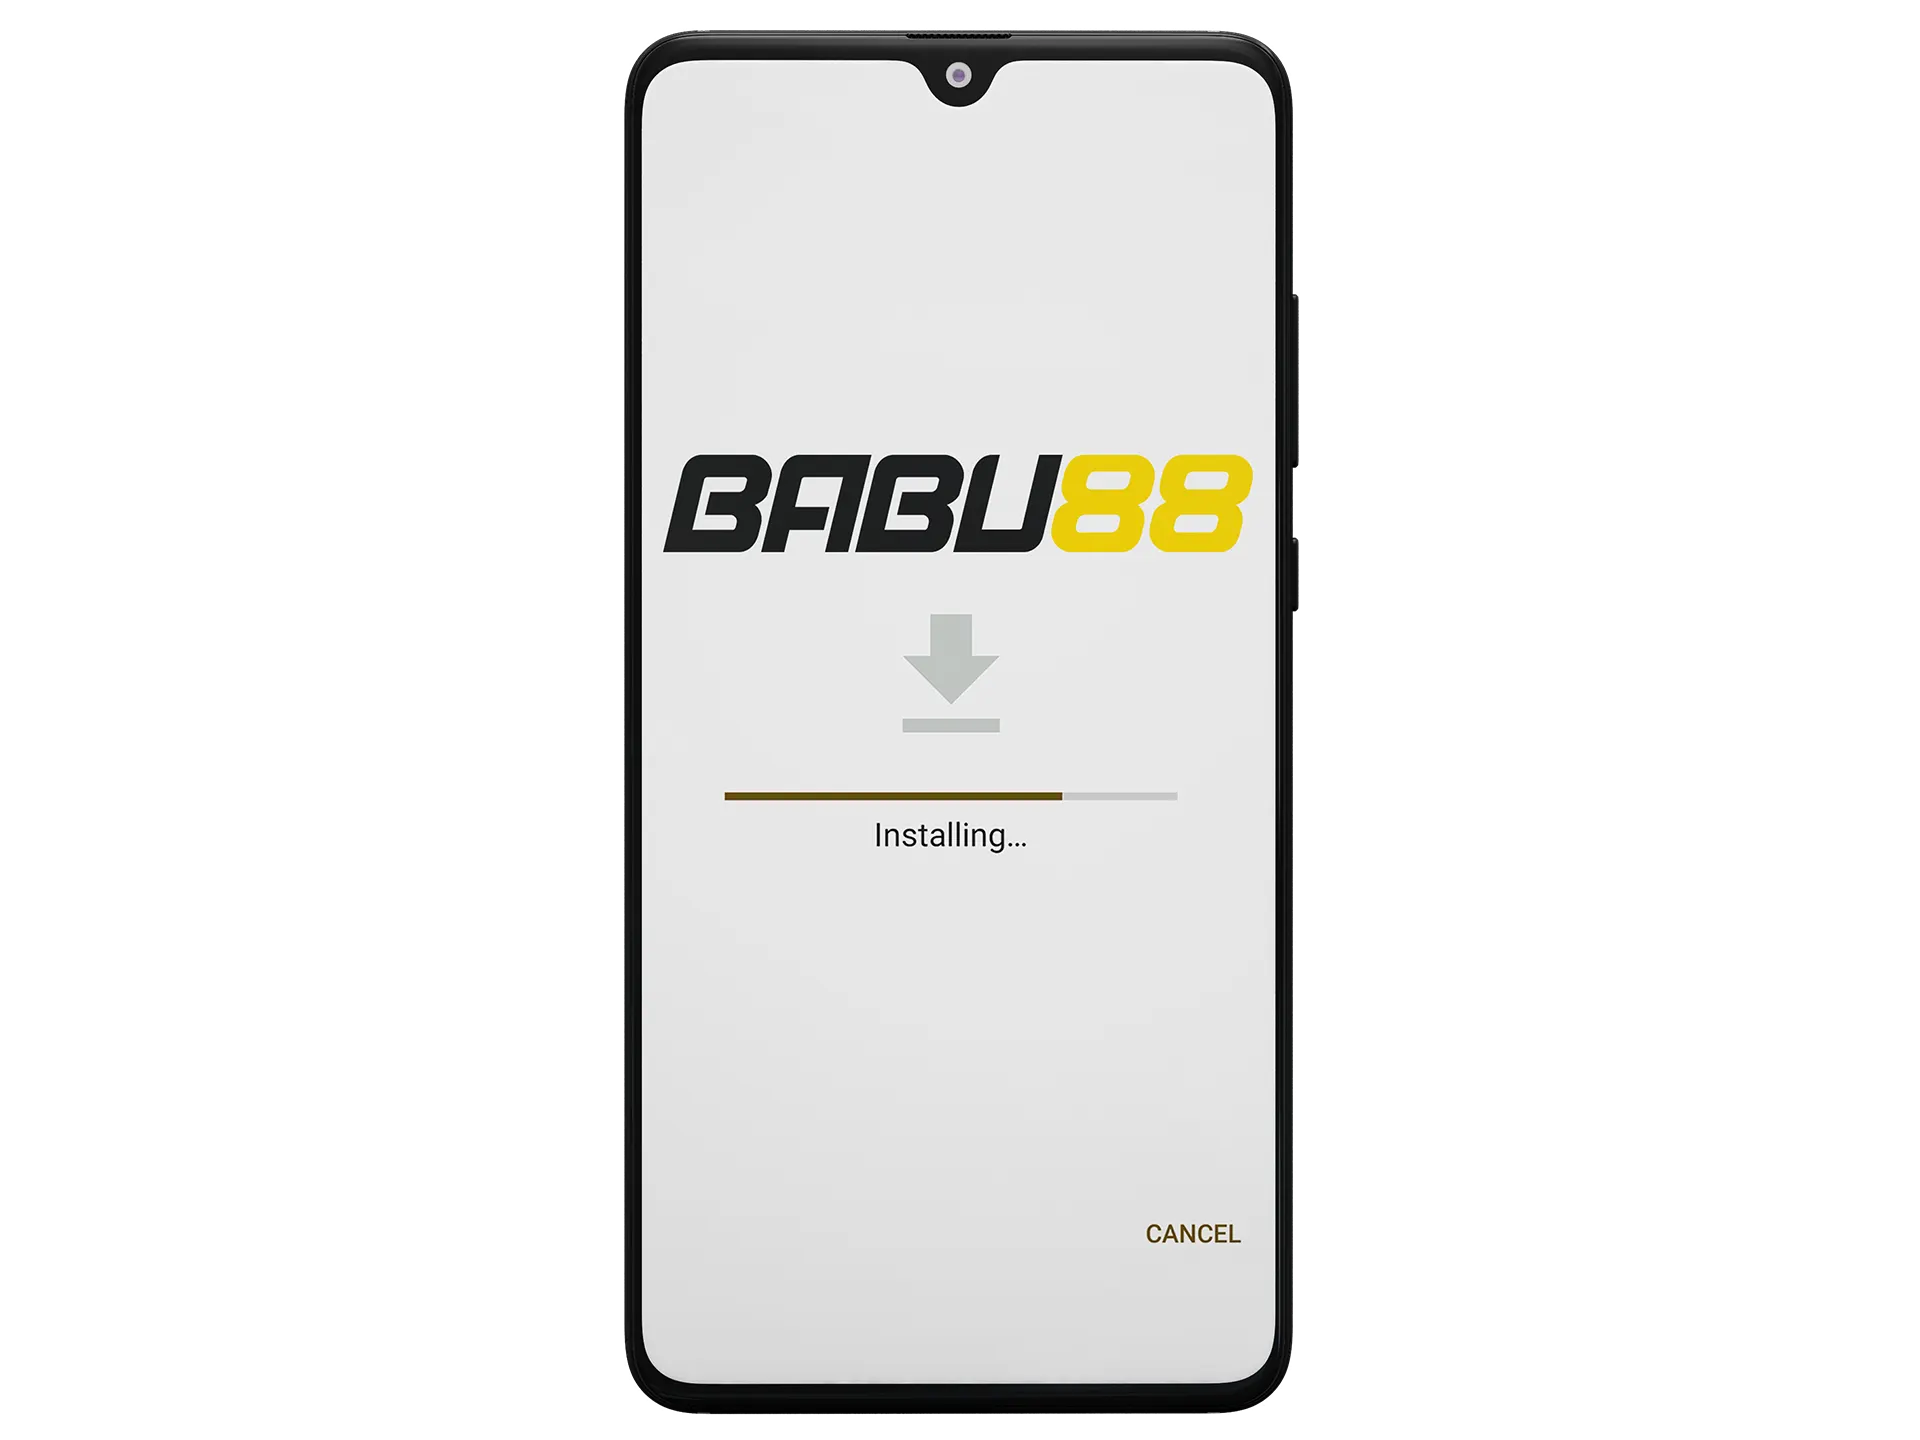 Make sure that Bau88 app is downloaded fully.